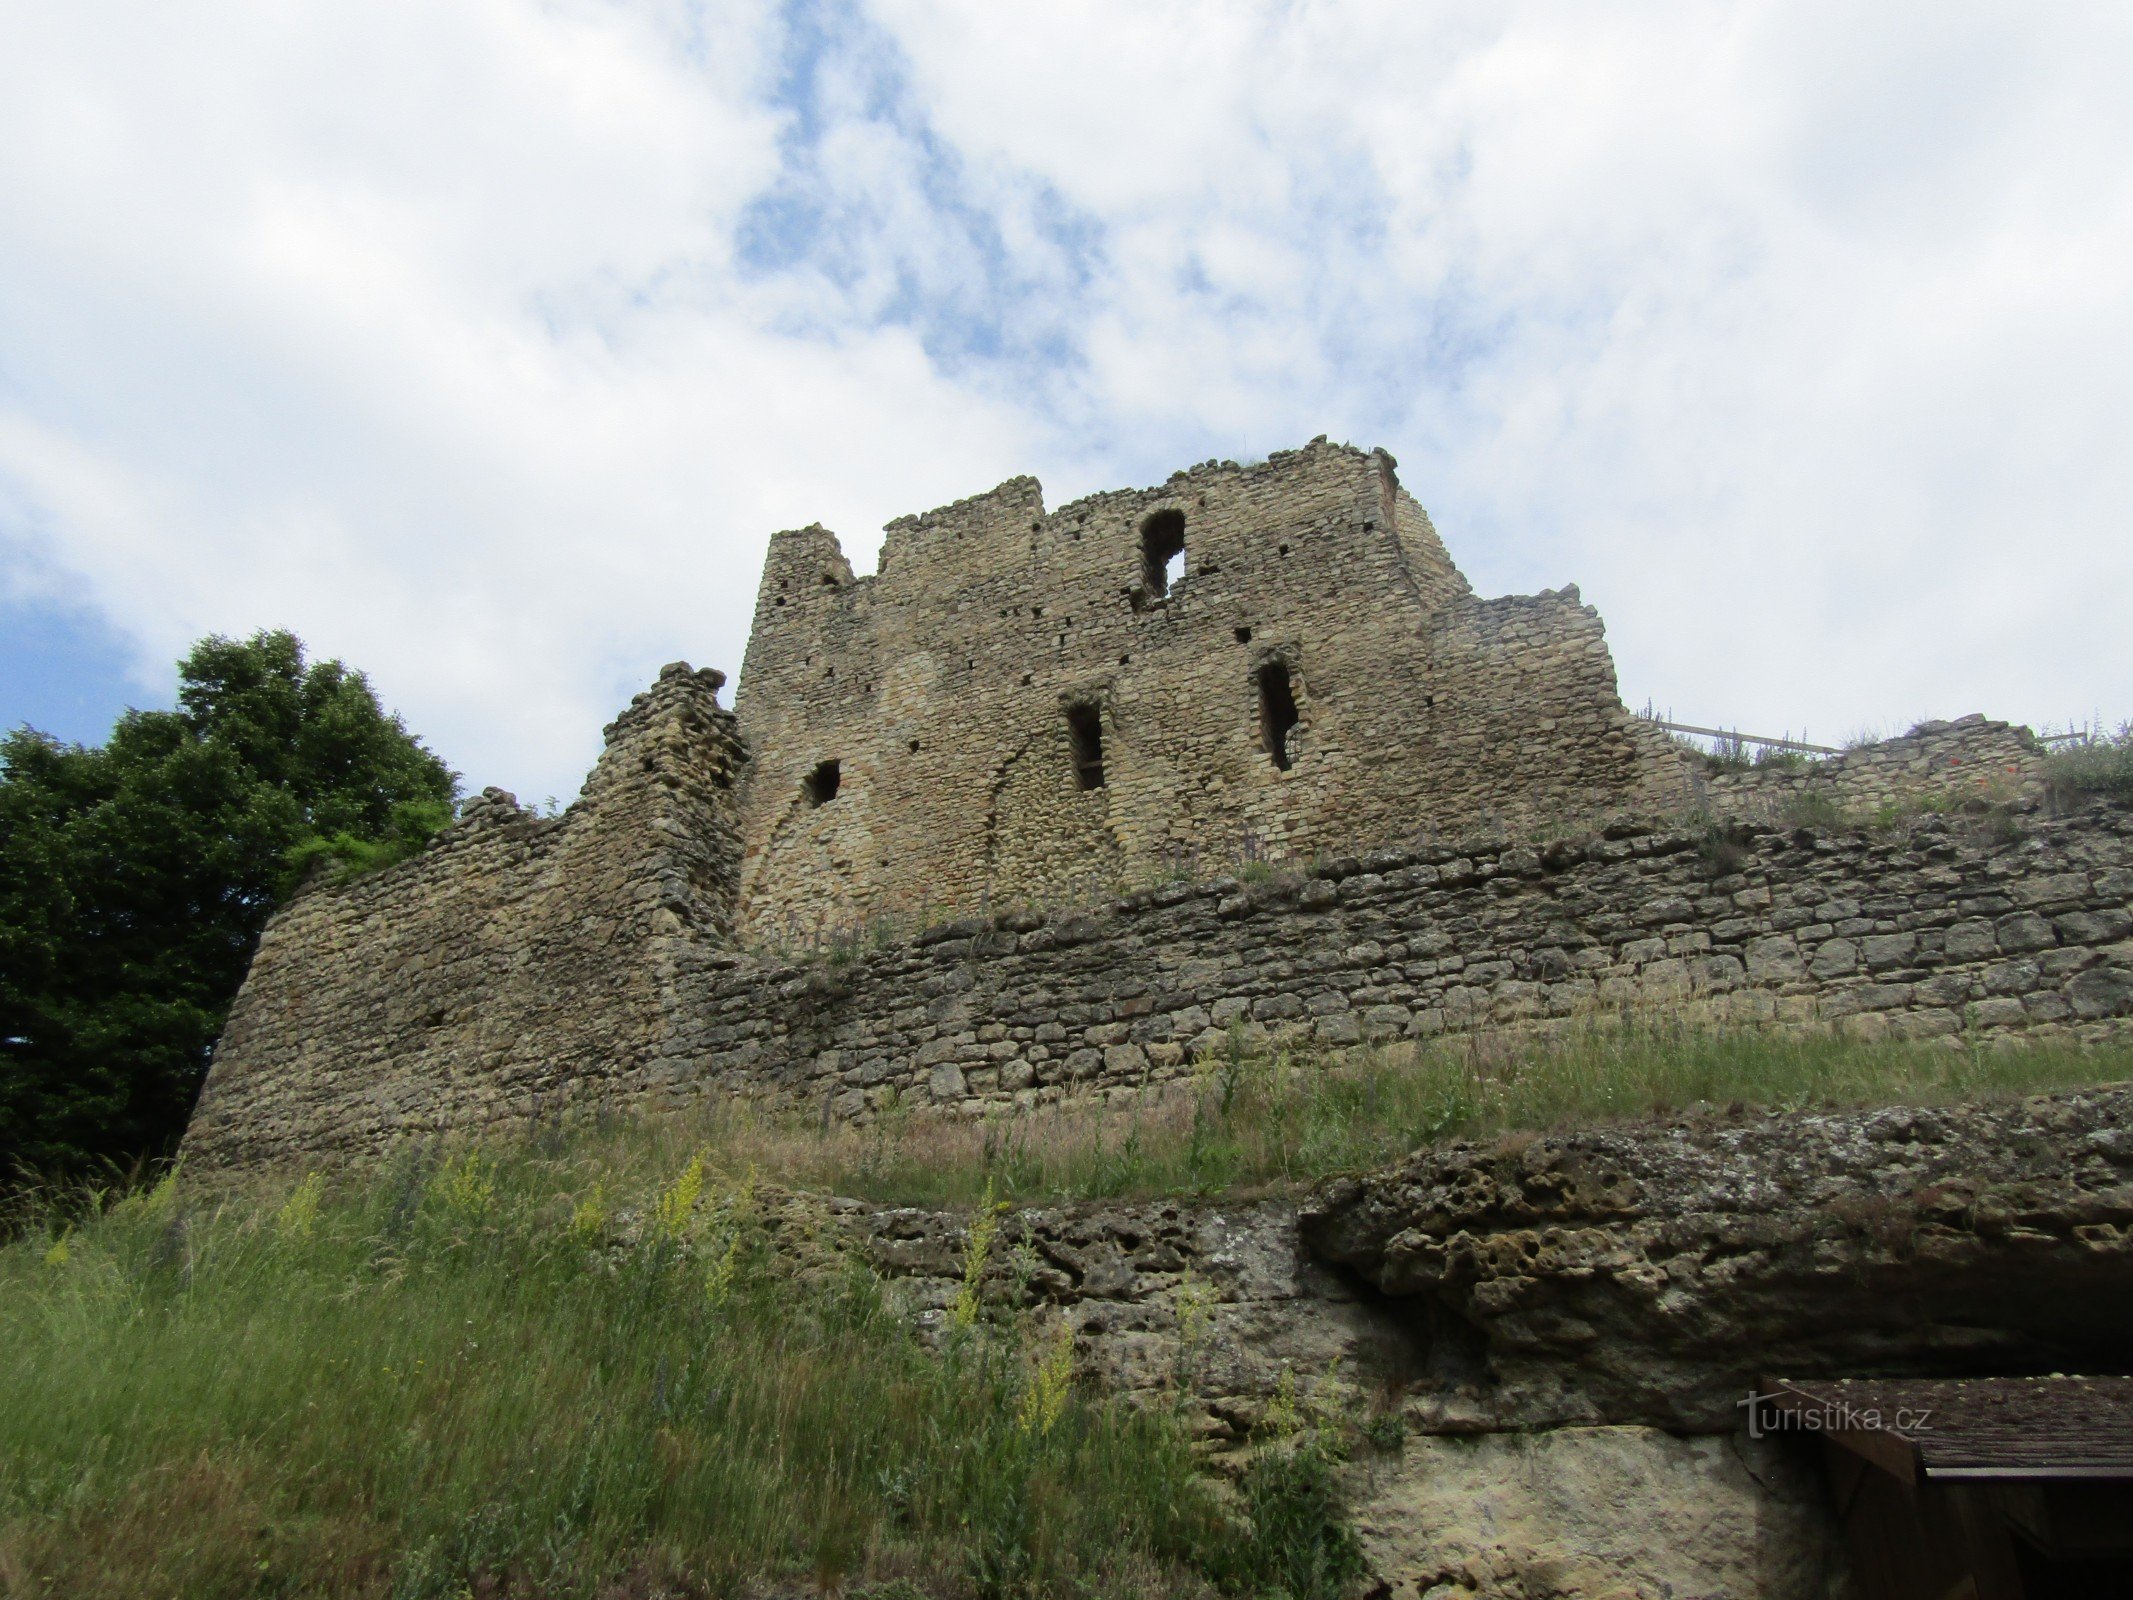 The ruins of Michalovice Castle